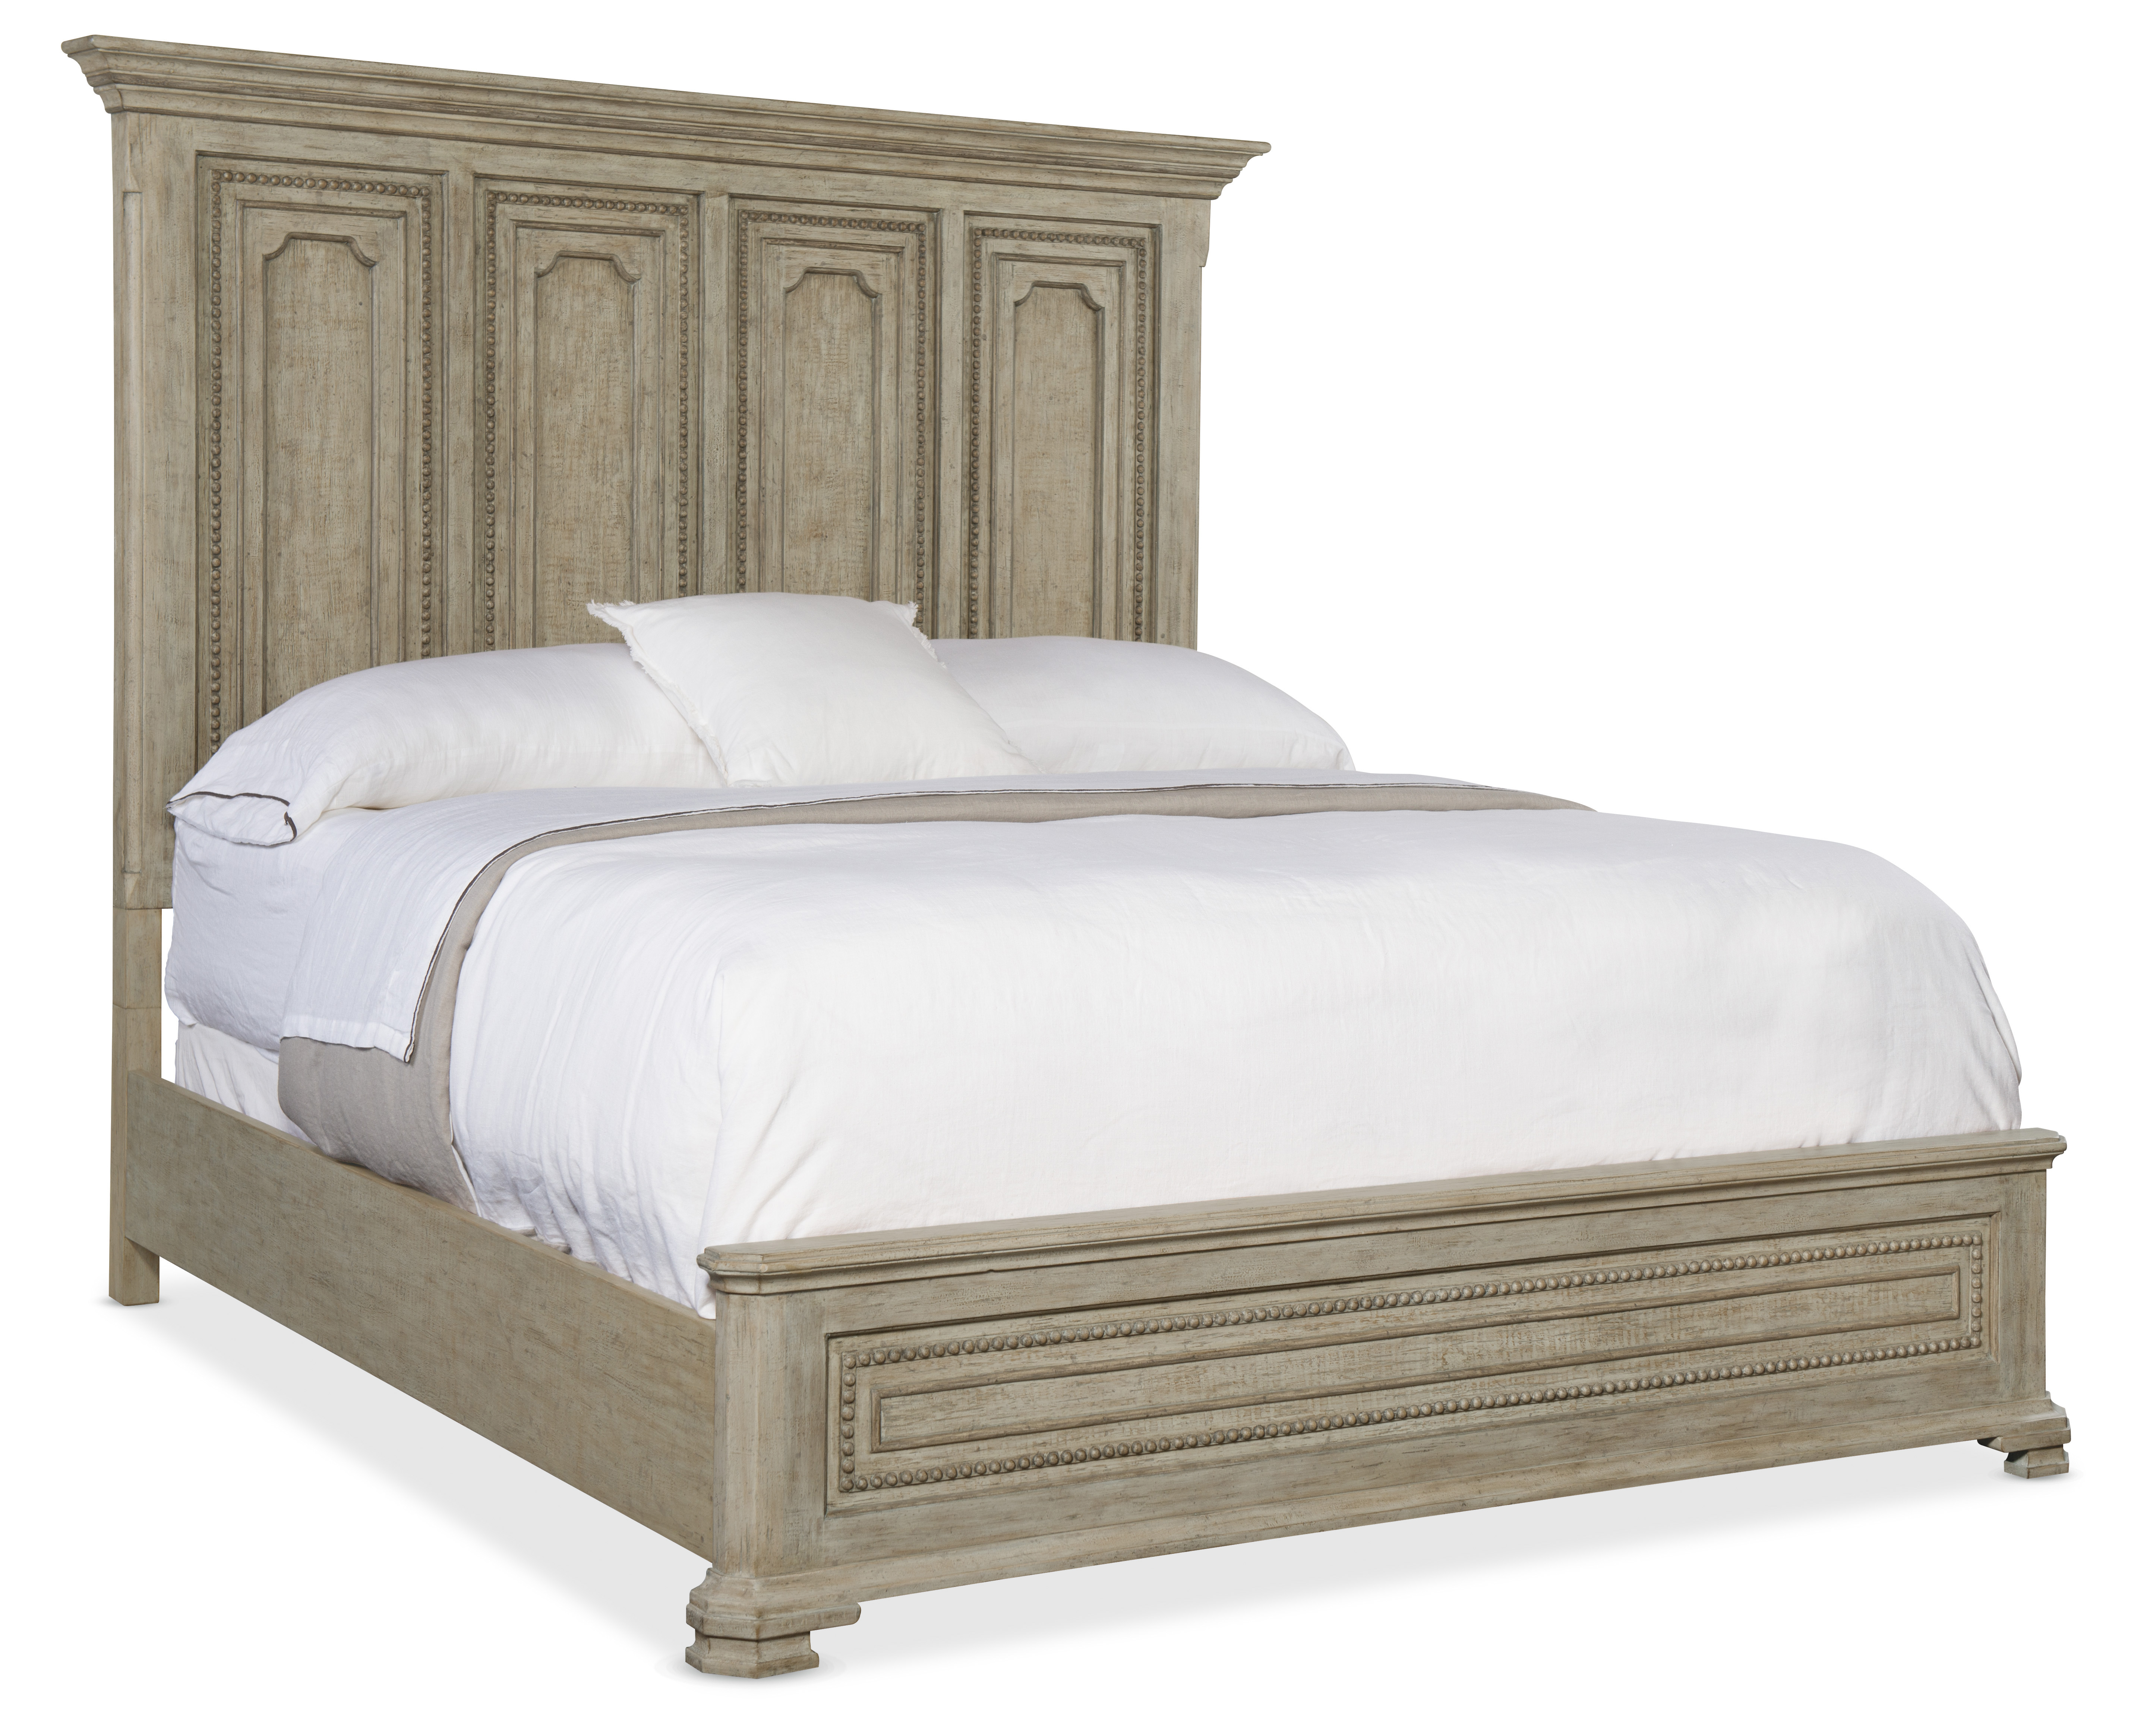 Picture of Leonardo King Mansion Bed